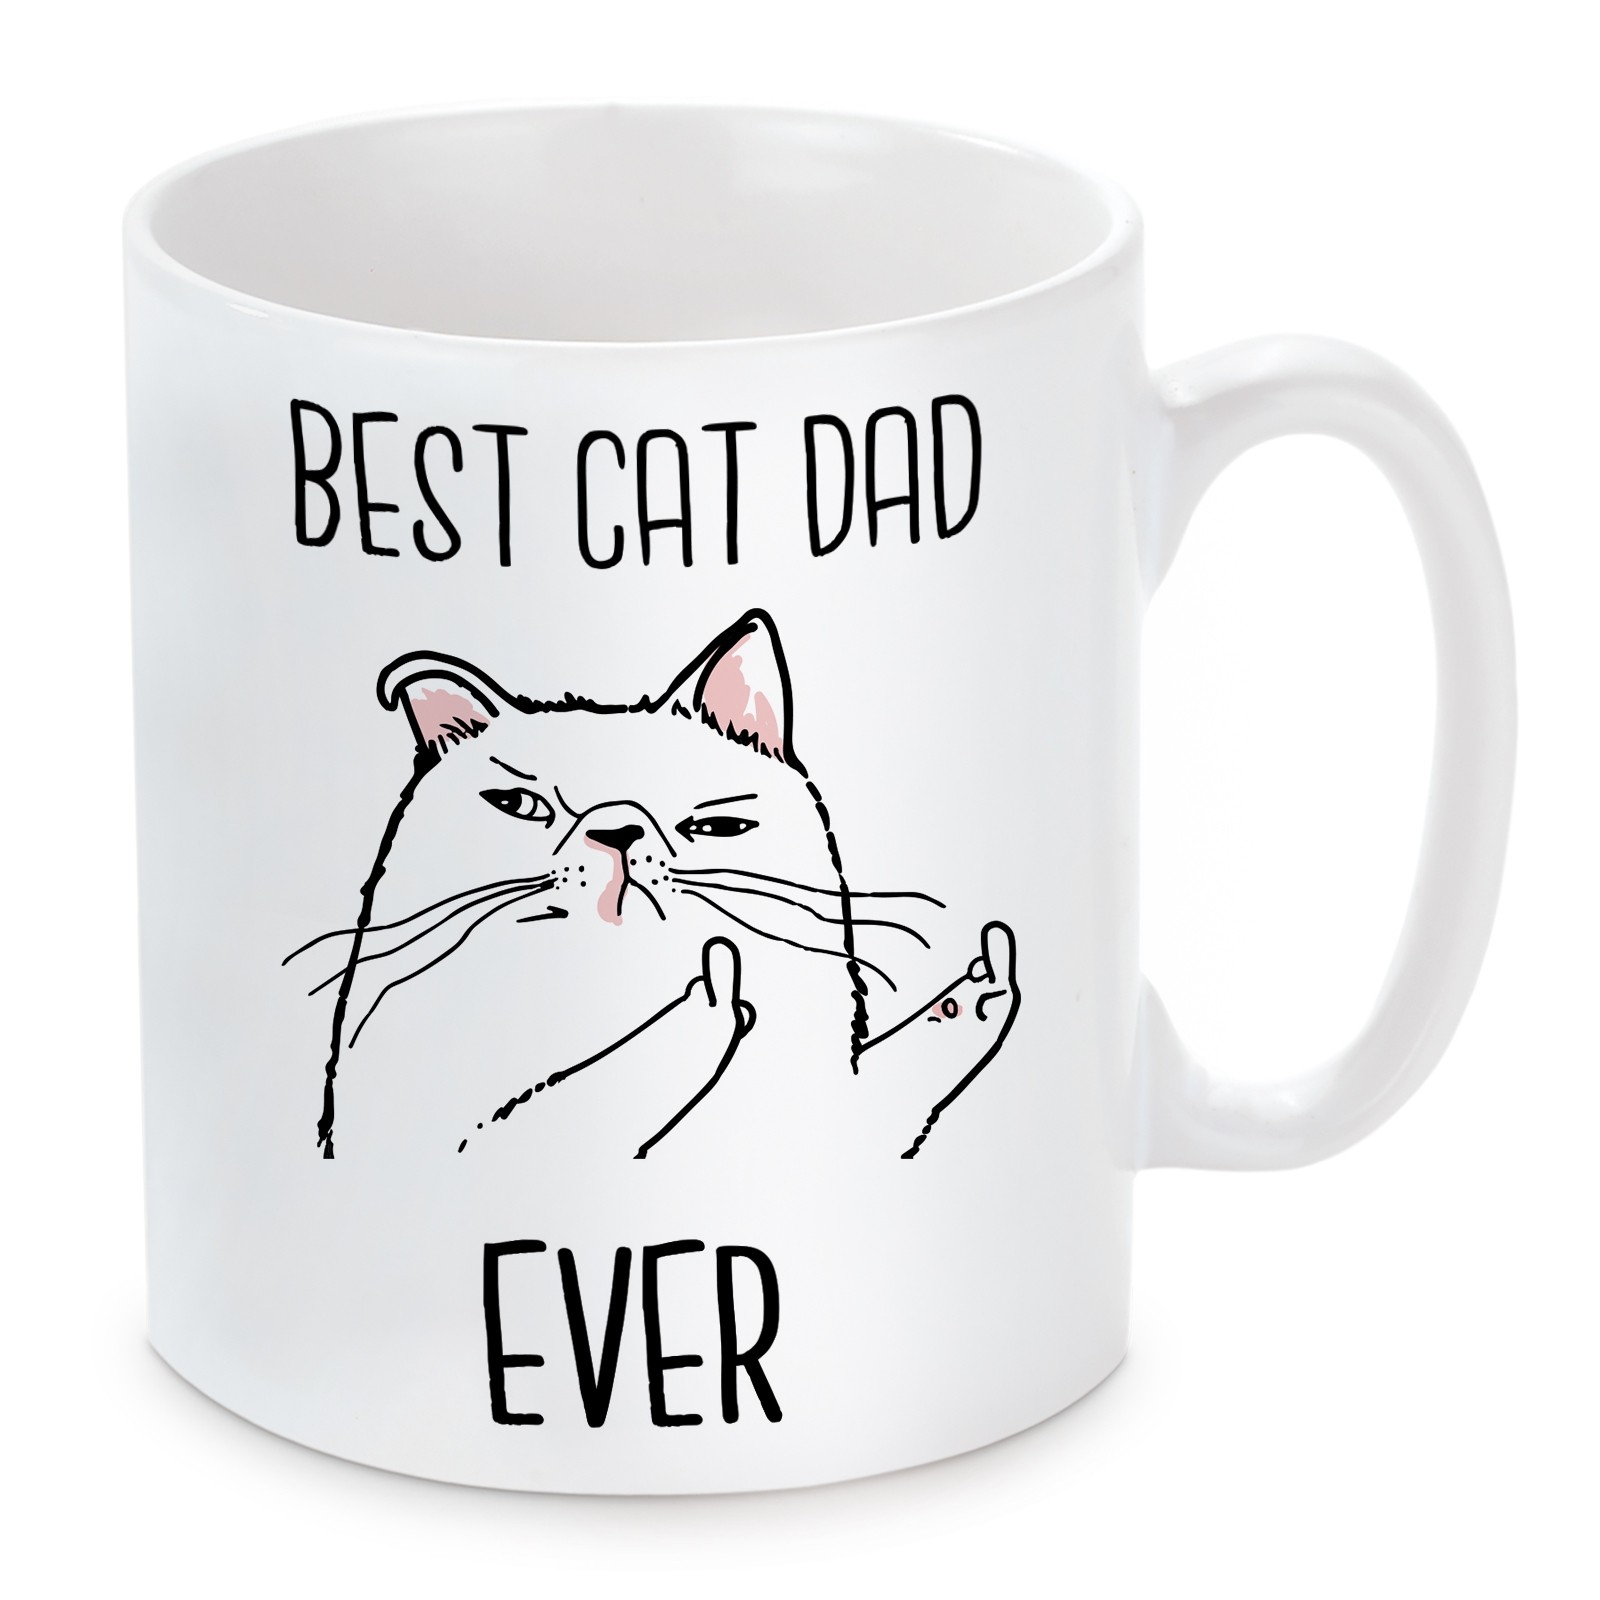 Tasse Modell: Best Cat Dad Ever.